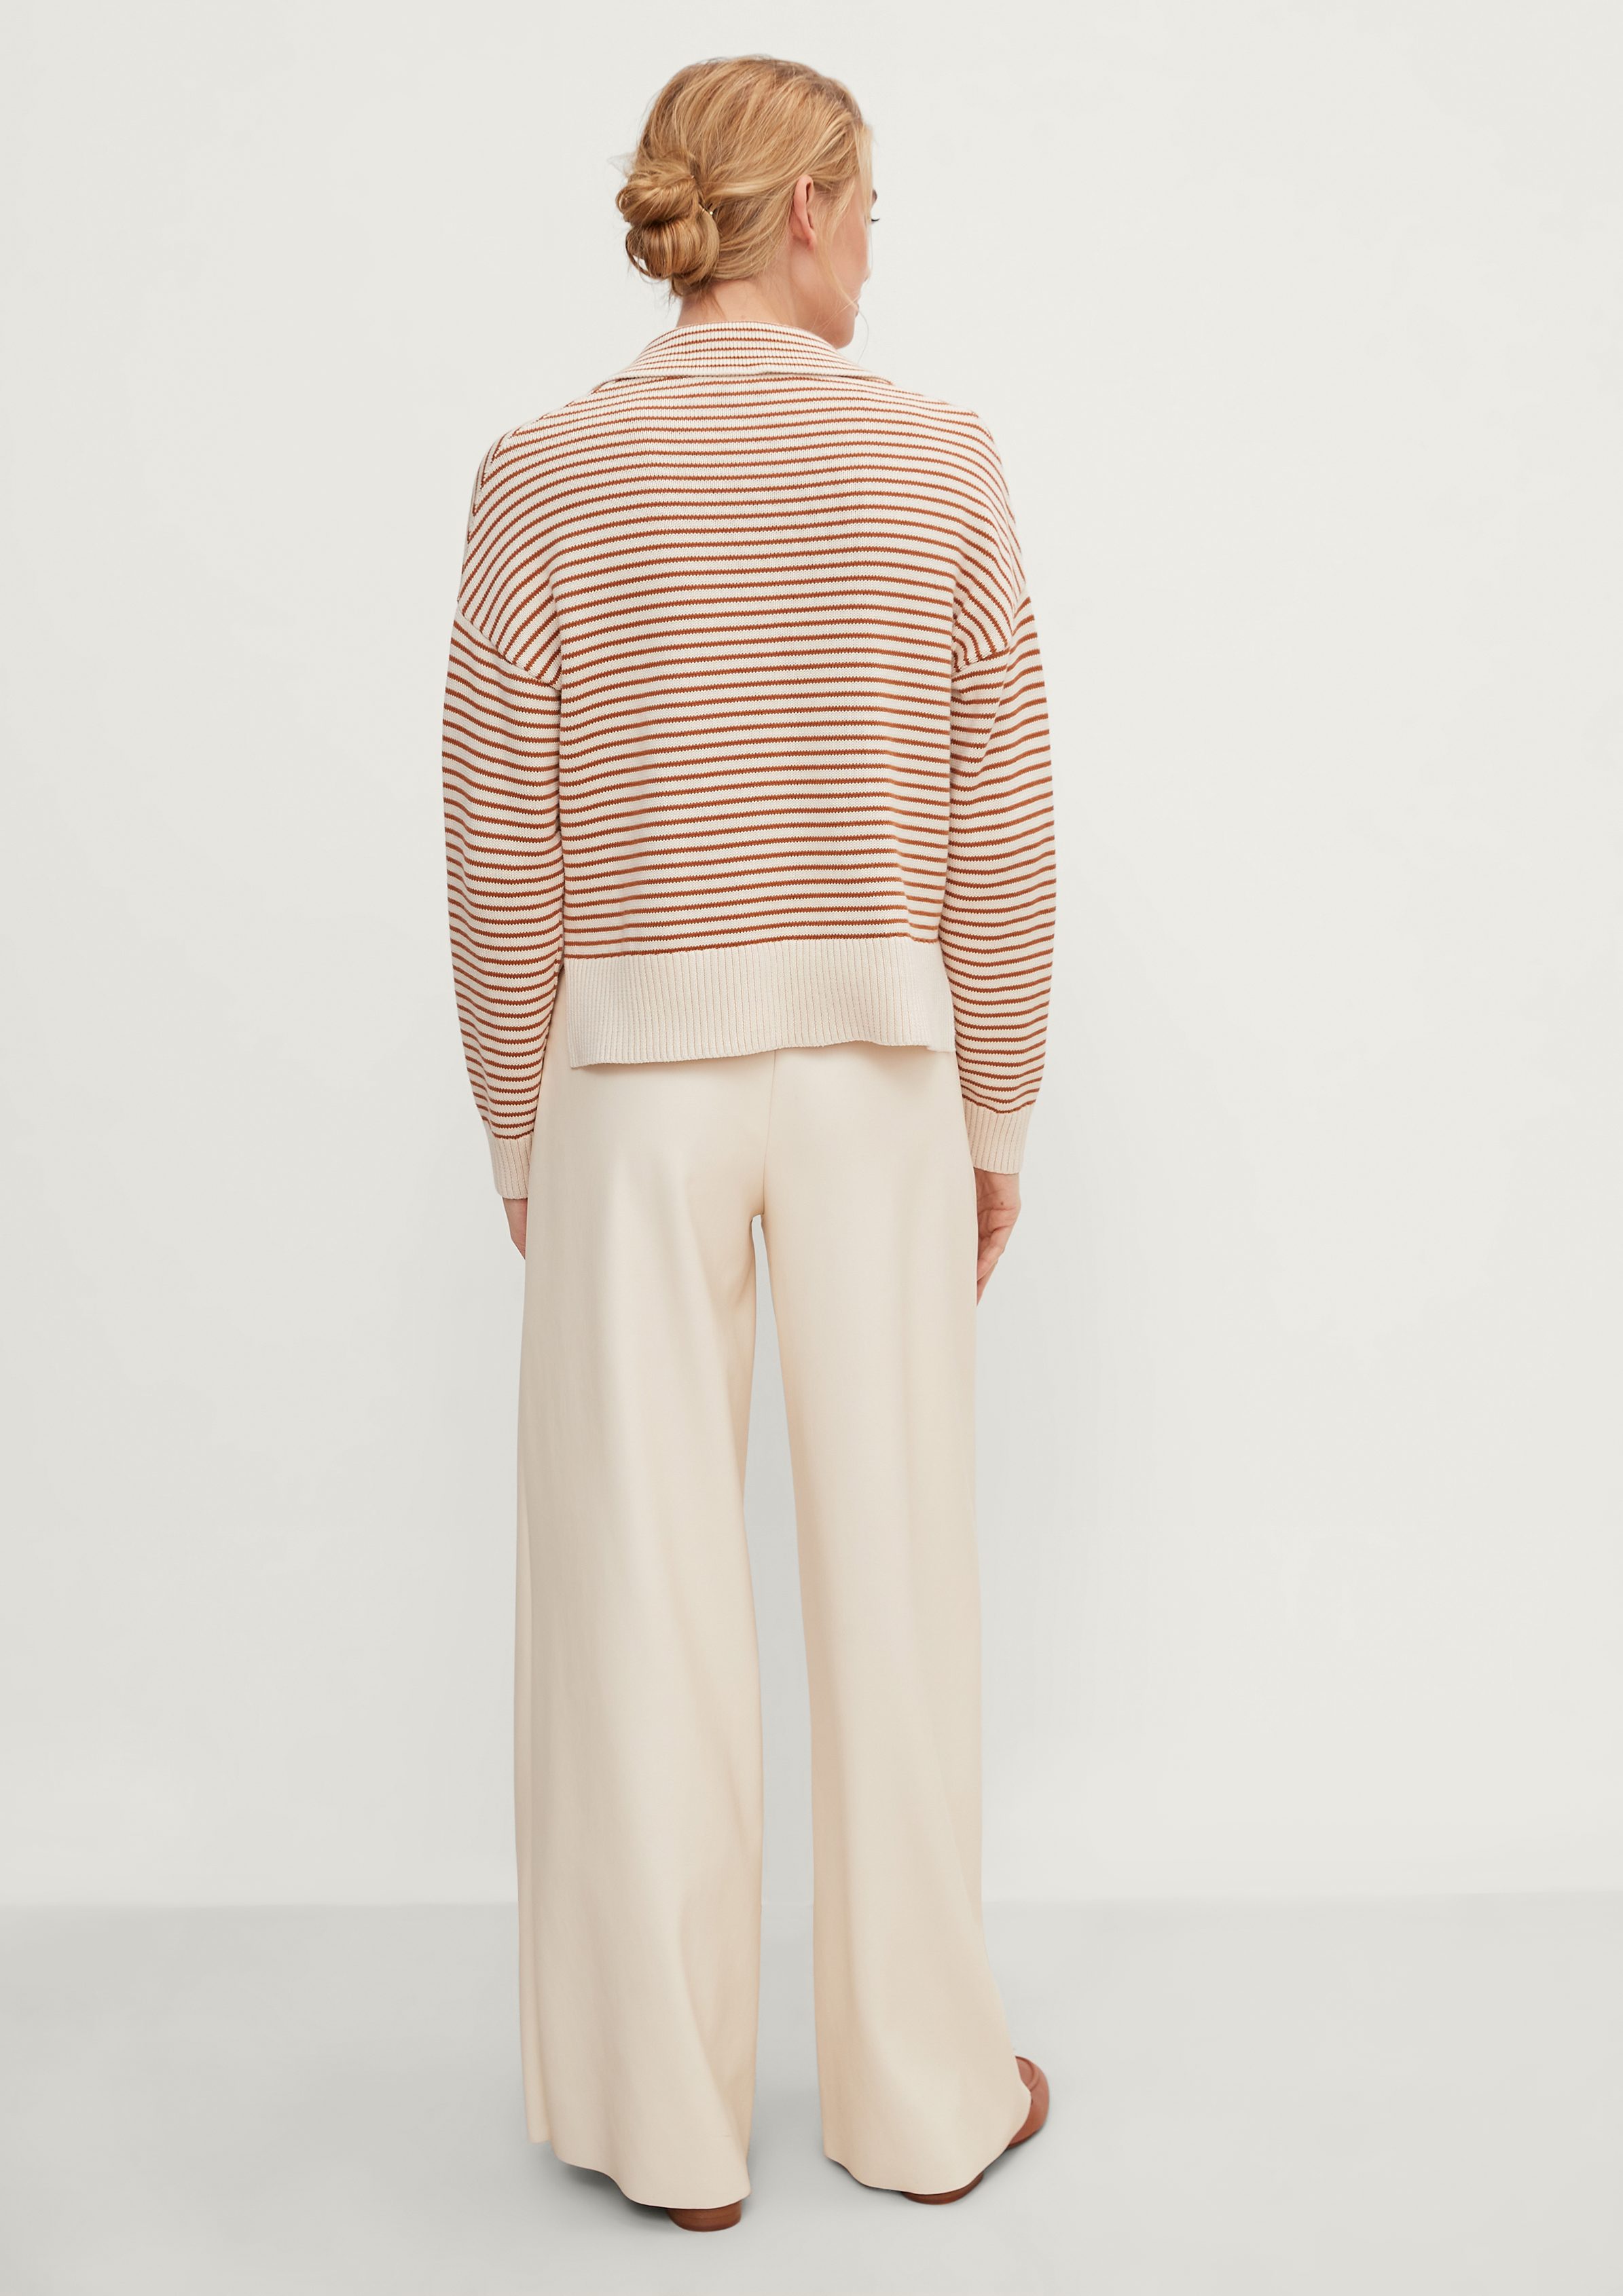 Comma Langarmshirt Pullover small Knit Streifen-Design stripes im